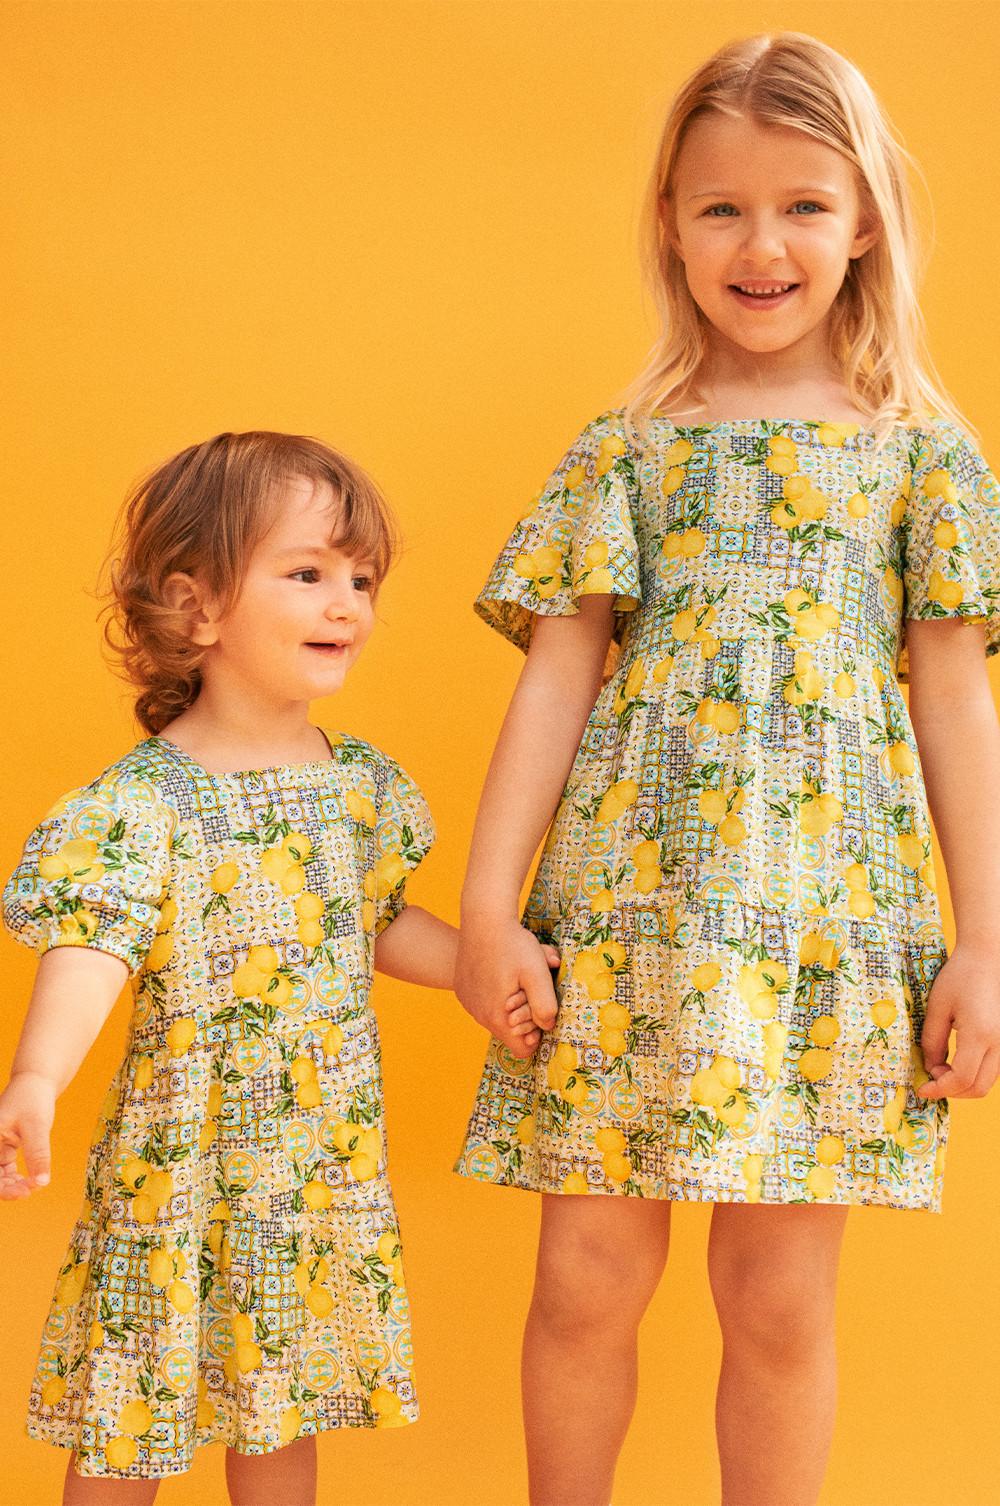 Kids in matching lemon print dresses